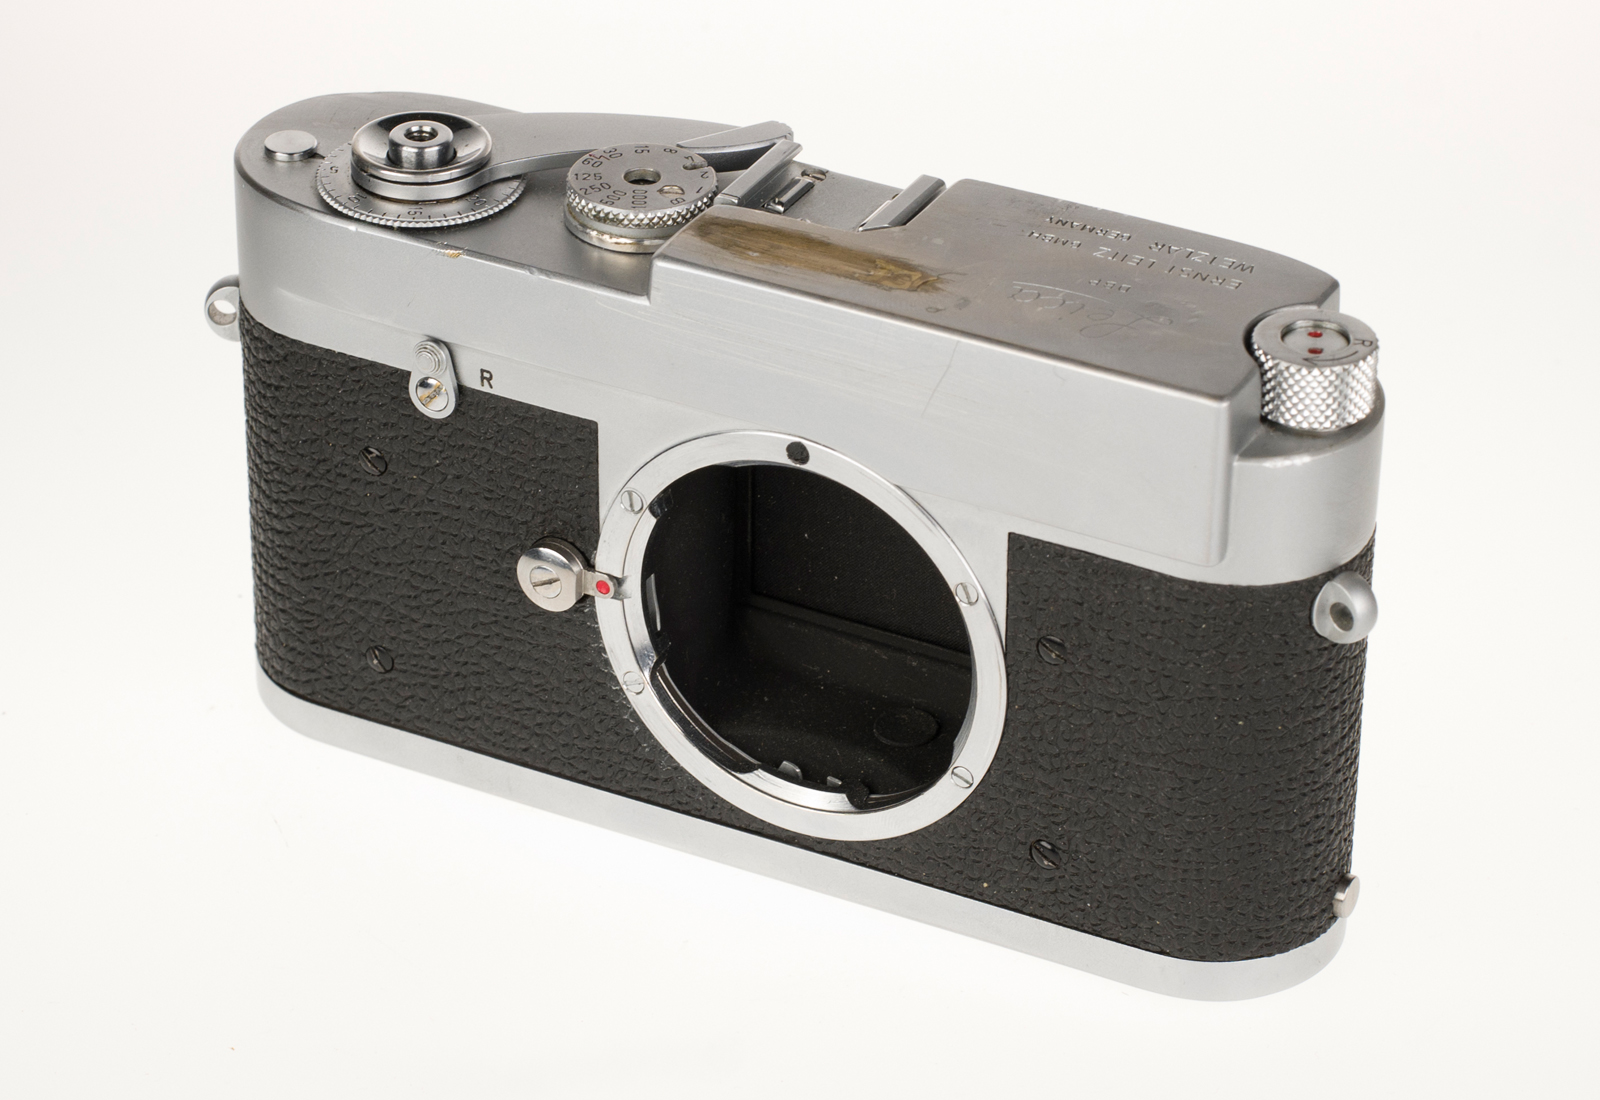 Leica MD, chrom + Telyt 1:4/200mm, schwarz + Visoflex II